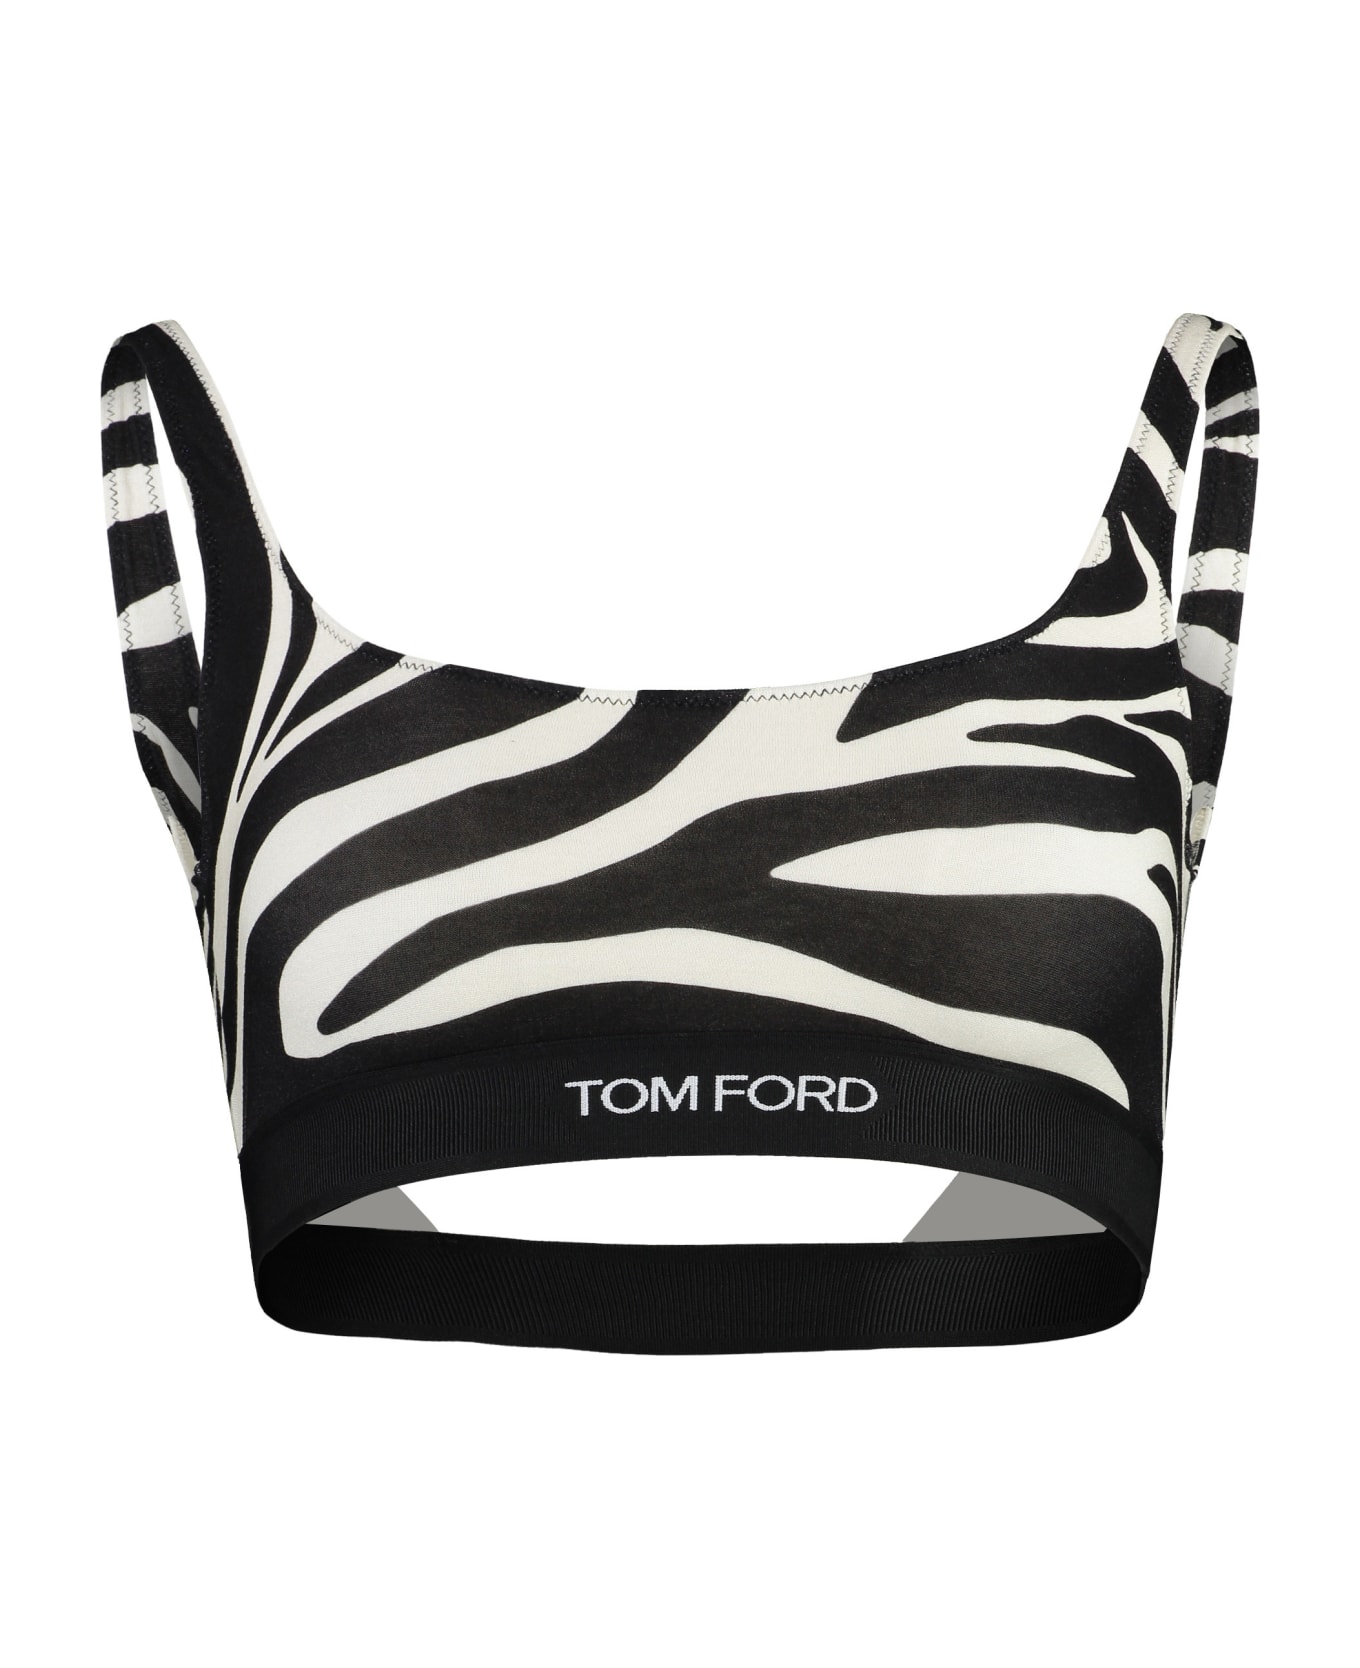 Tom Ford Sports Bra - Animalier